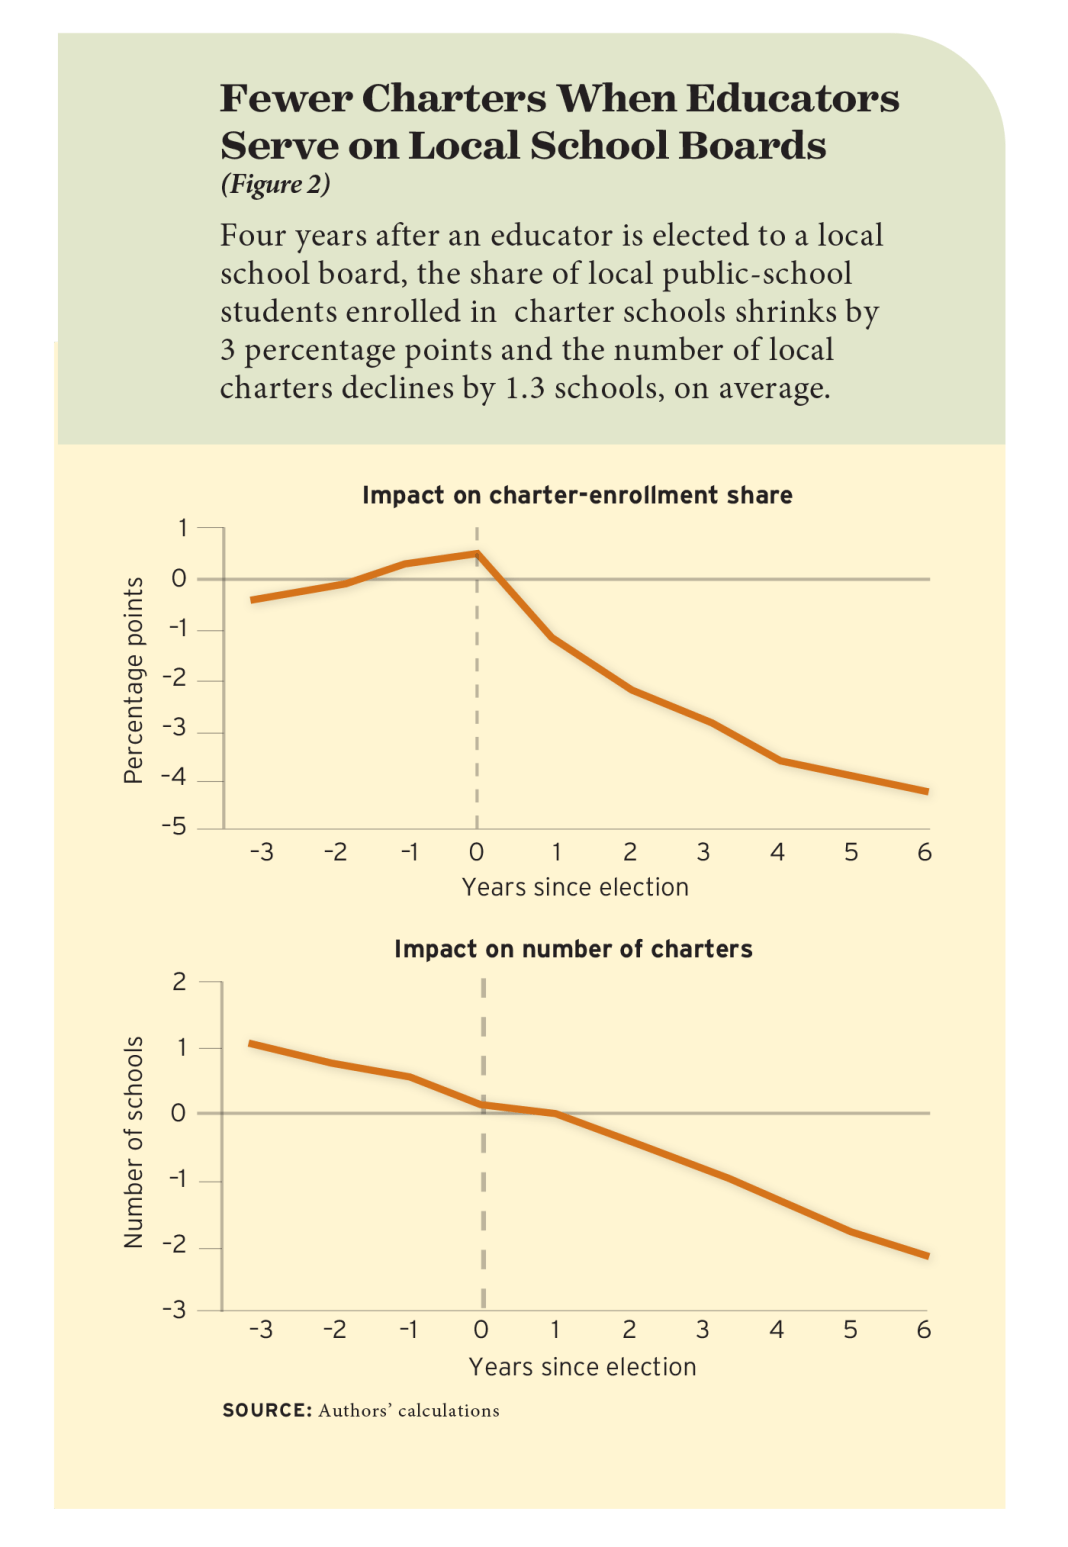 Figure 2: Fewer Charters When Educators Serve on Local School Boards